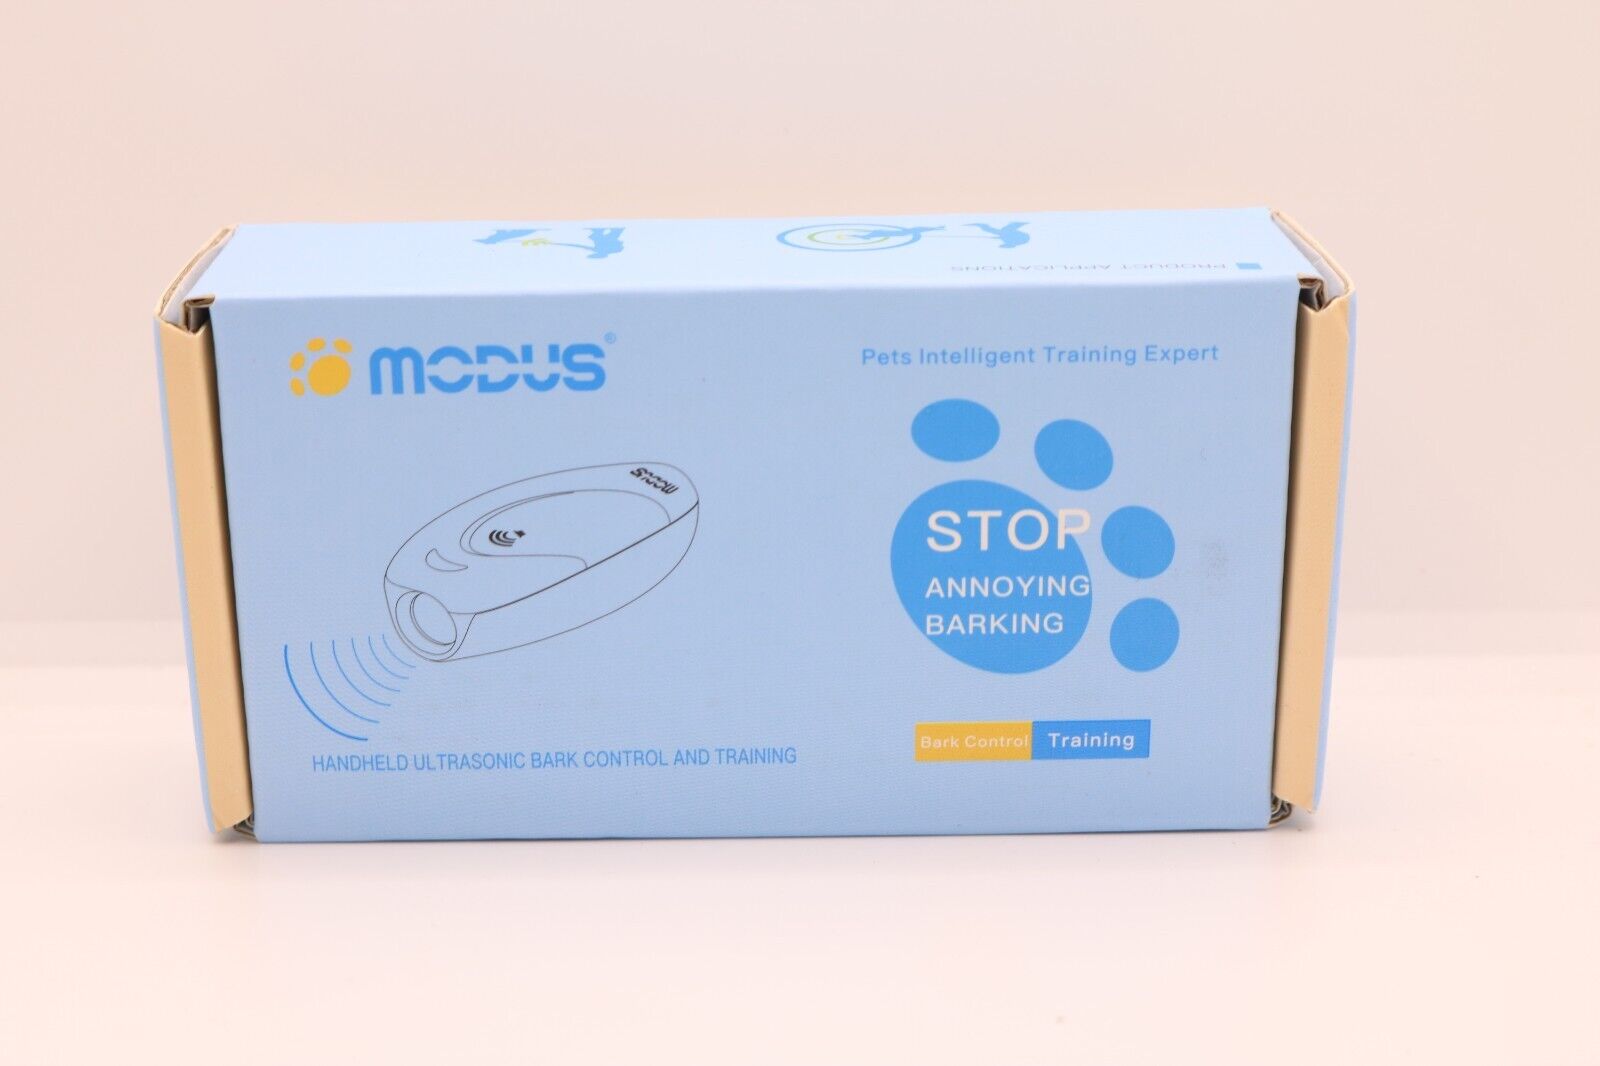 Modus Handheld Ultrasonic Bark Control And Training Device Model # M-230